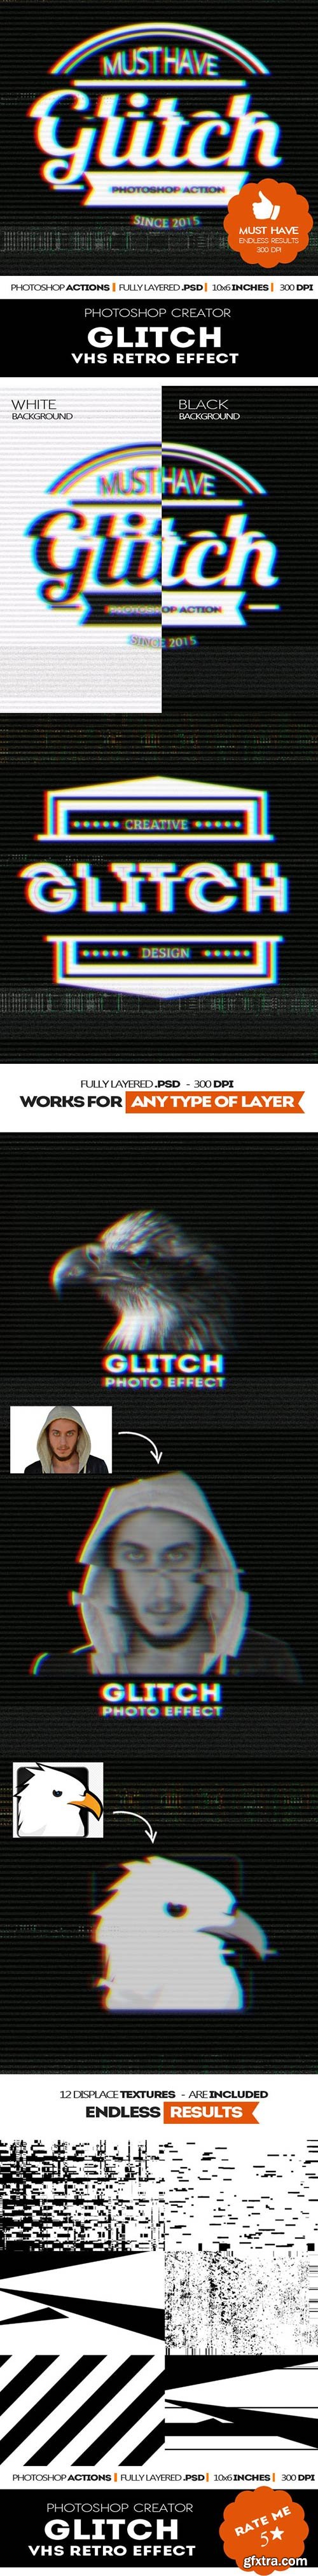 GraphicRiver - Glitch VHS Corrupt Image Effect Photoshop Actions